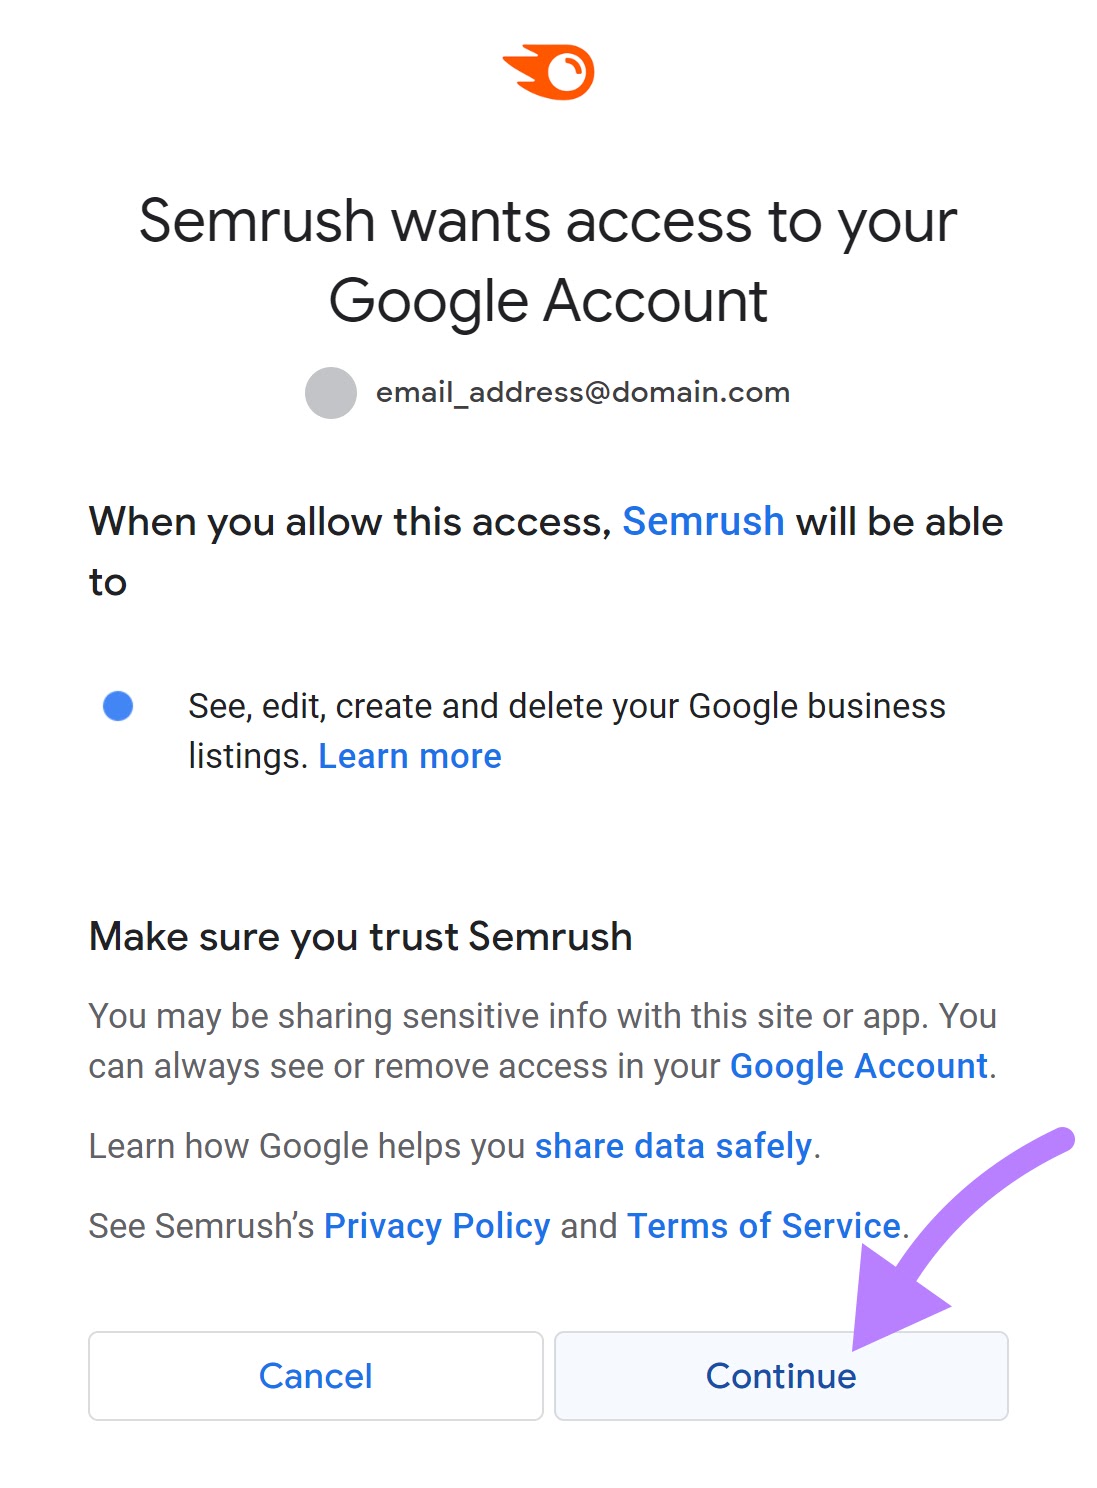 "Semrush wants to access your Google Account" window